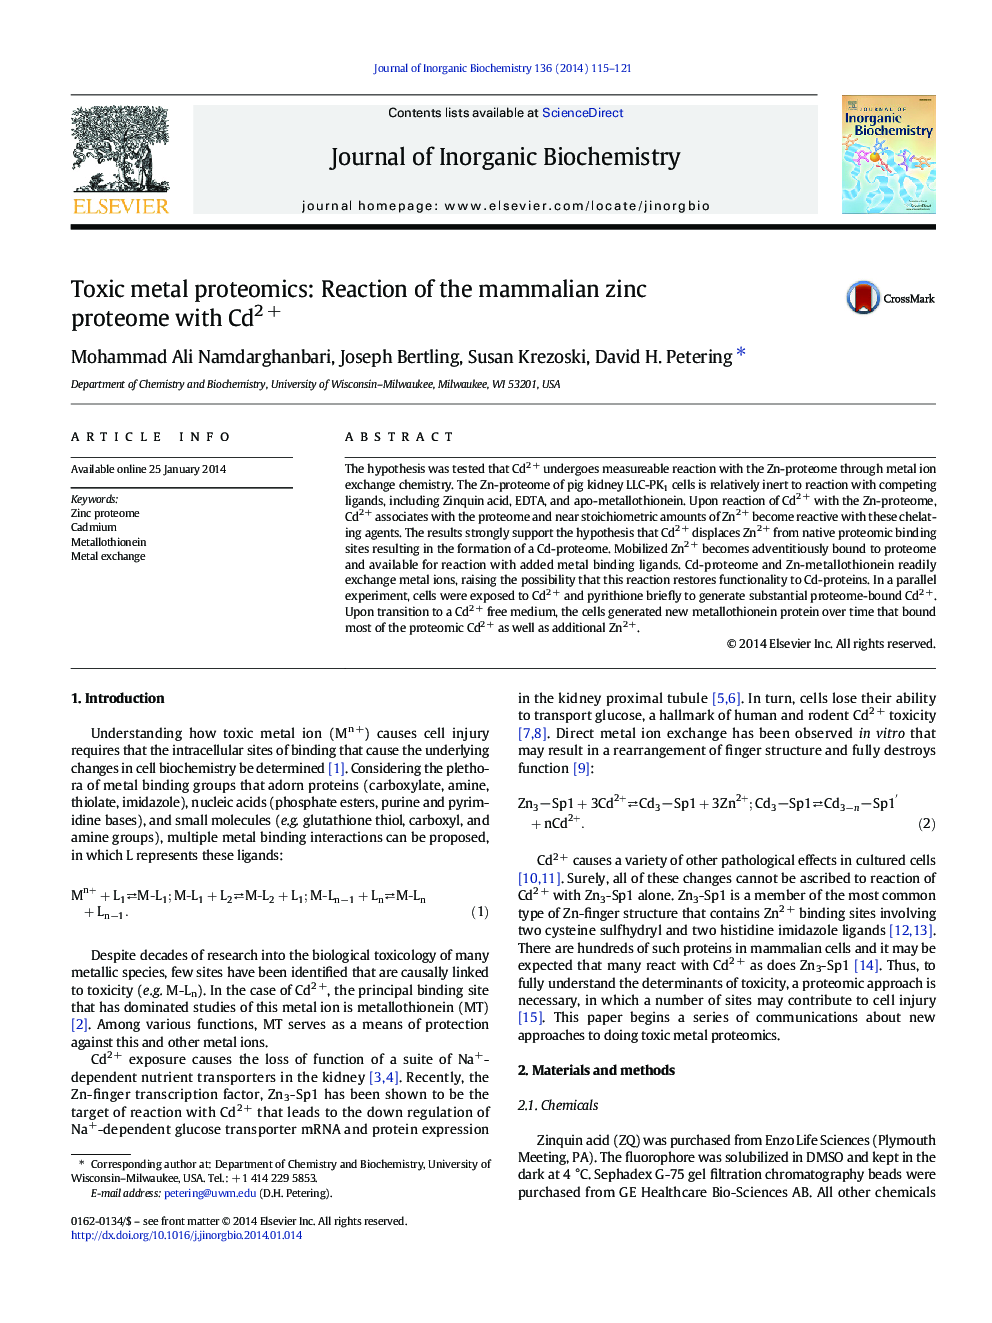 Toxic metal proteomics: Reaction of the mammalian zinc proteome with Cd2 +